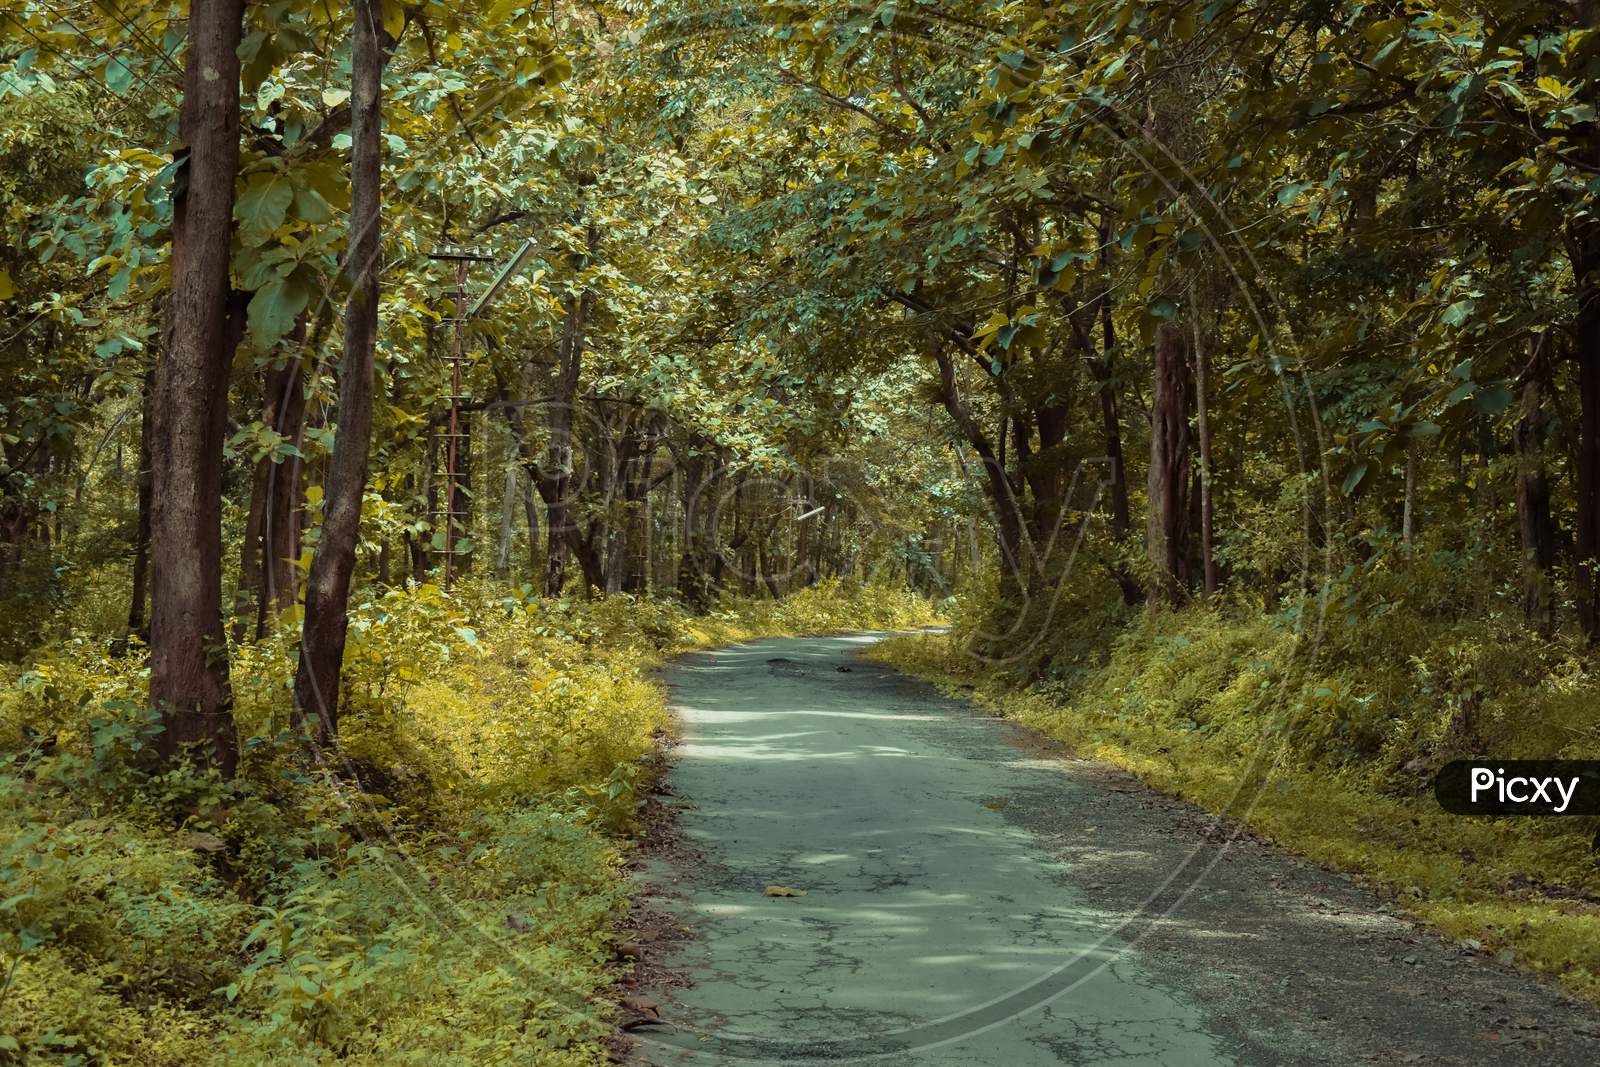 Trees of dandeli forest along the pathway, Karnataka,India